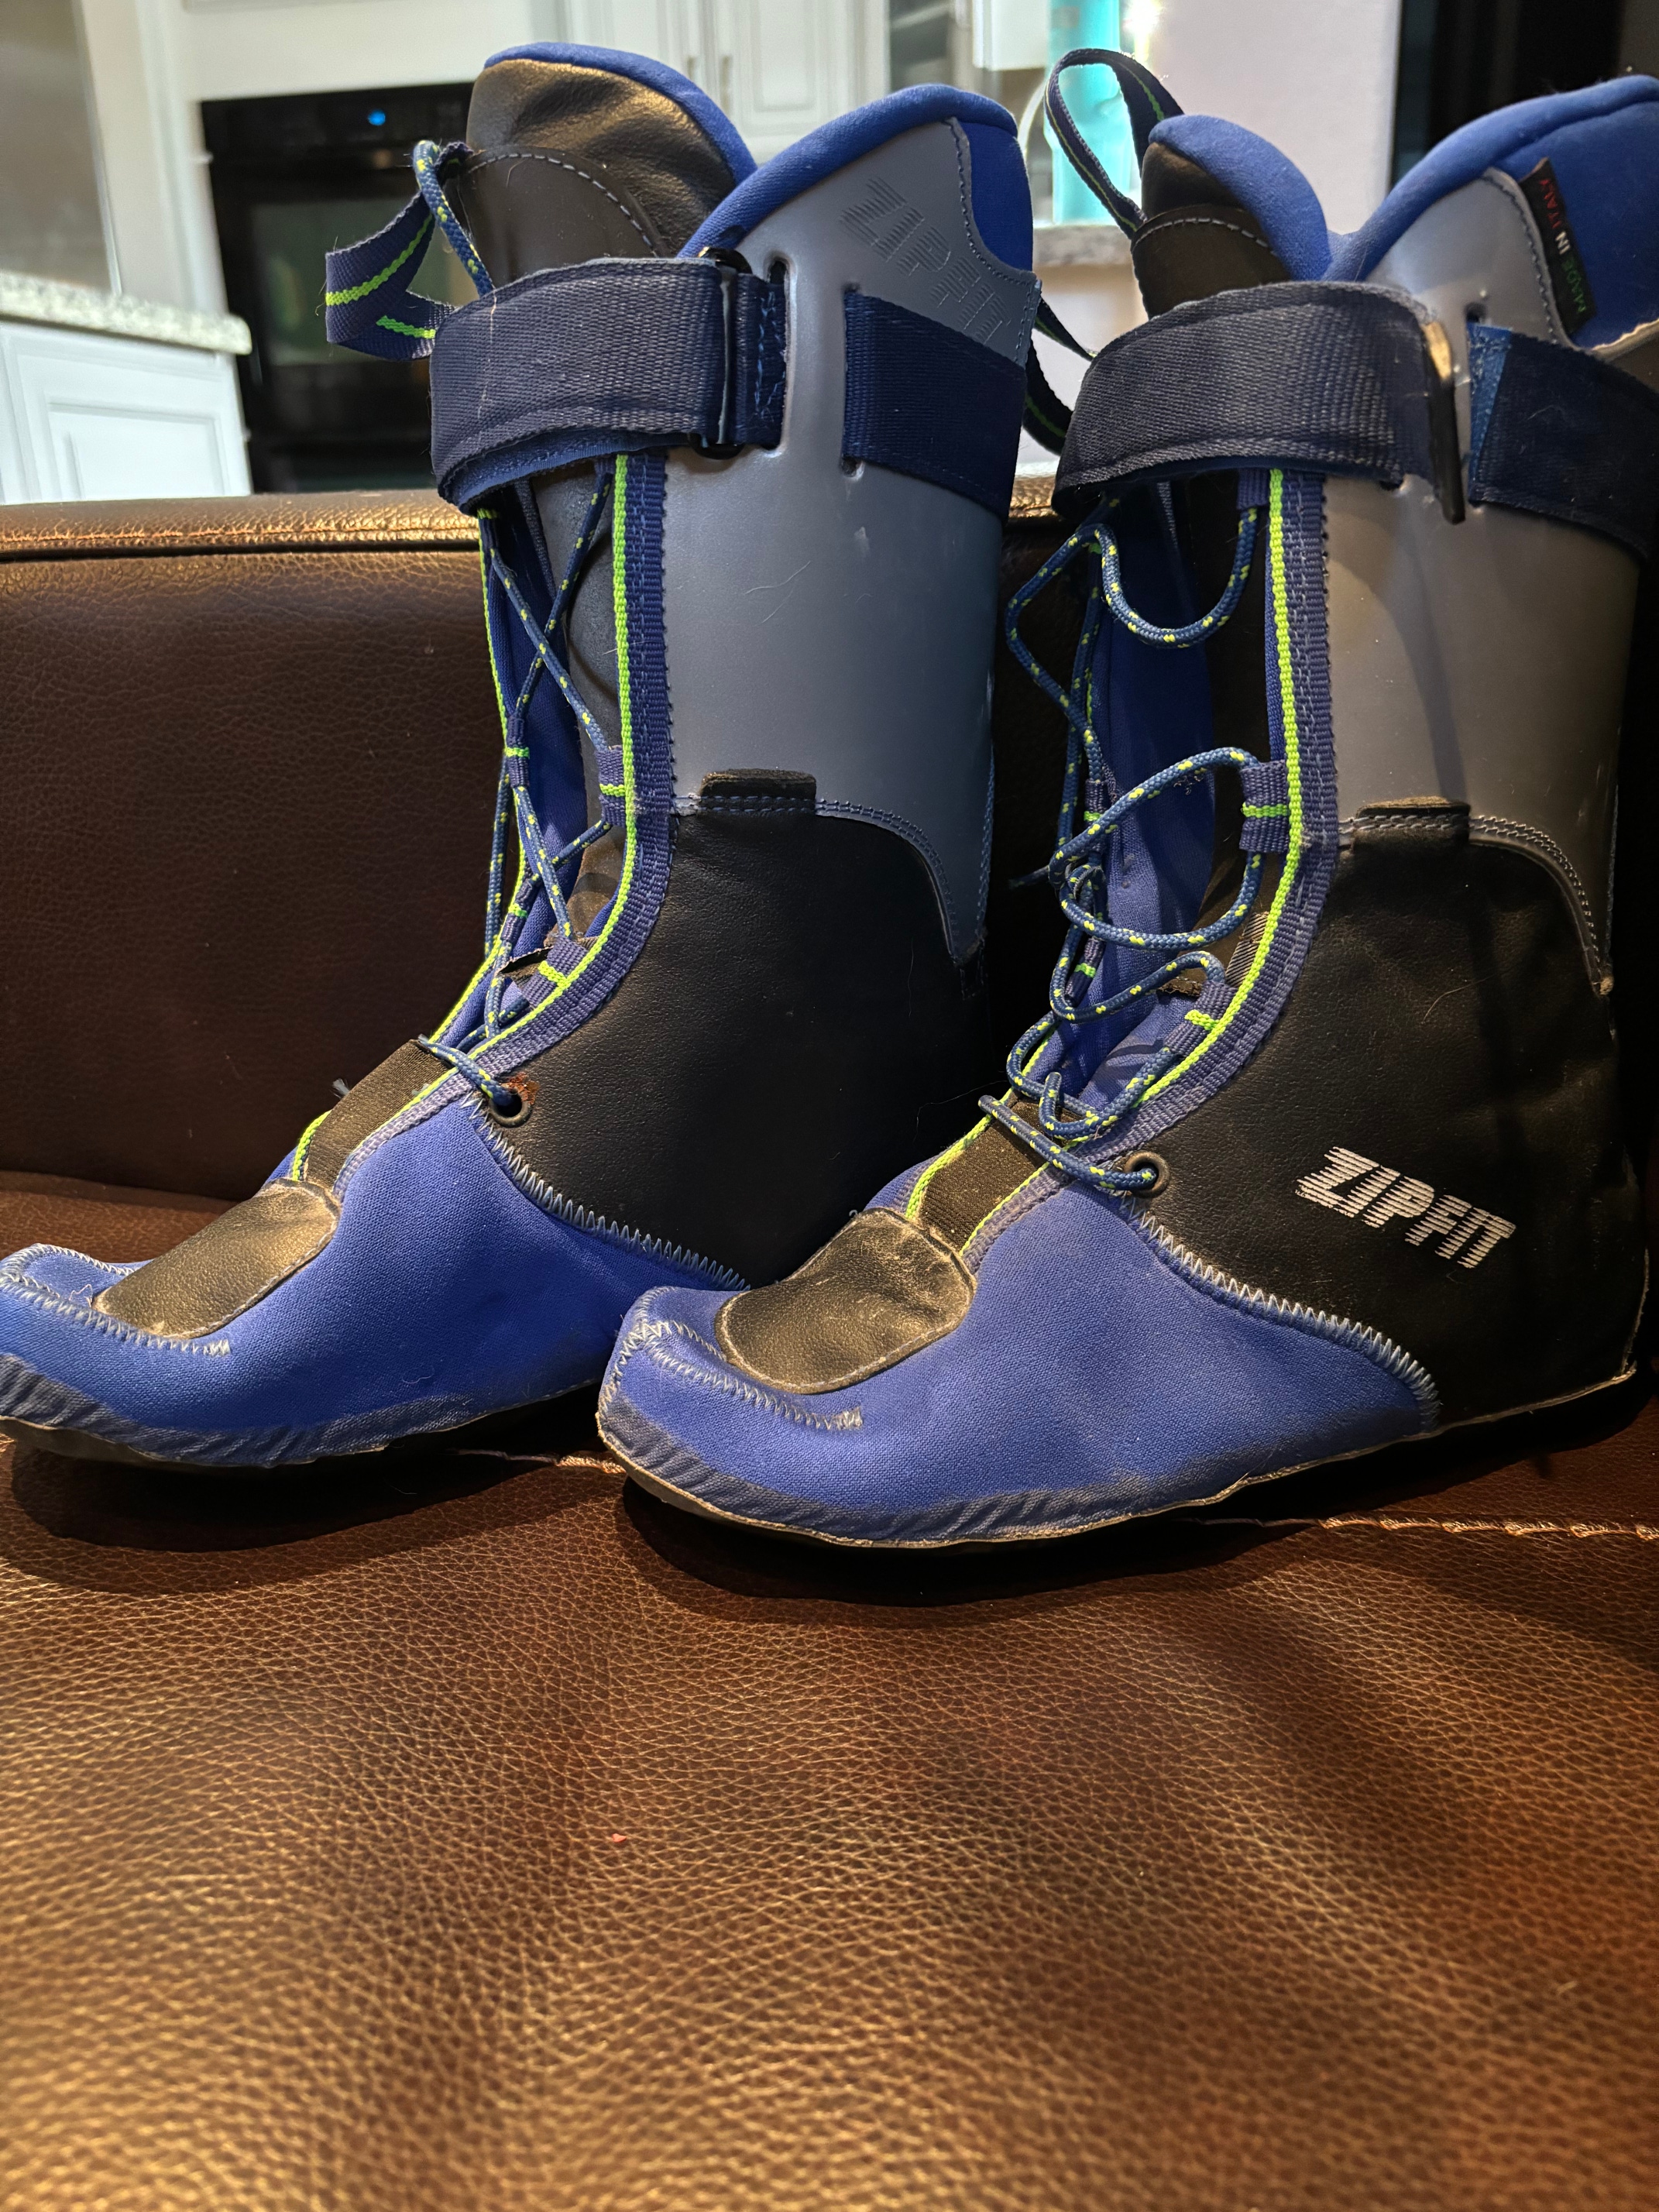 Zipfit performance ski boot liners 24.5